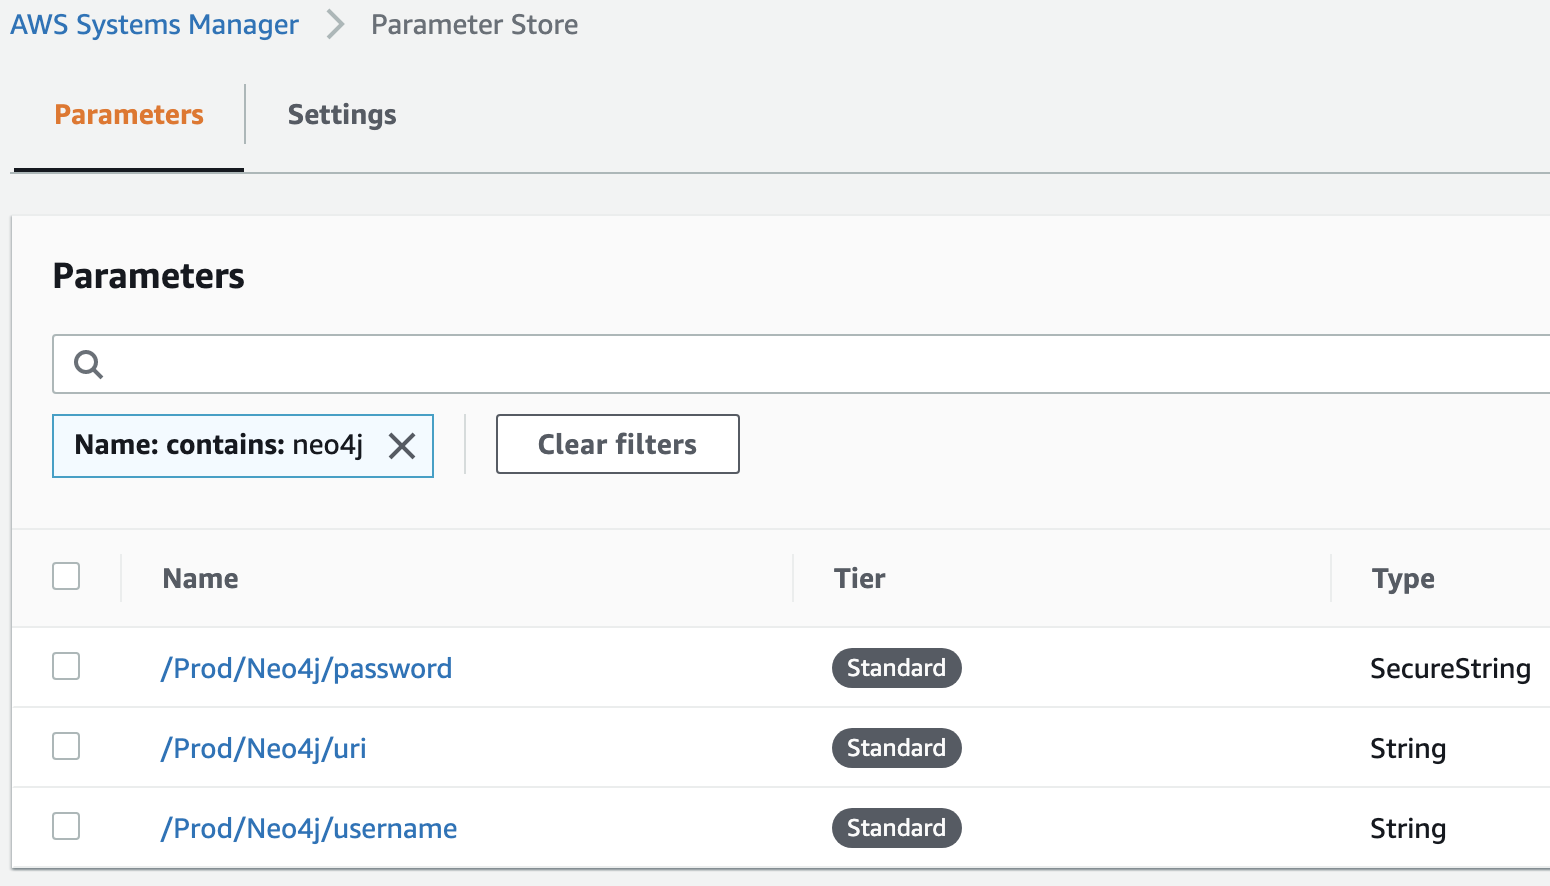 Neo4j Login Details in AWS SSM Parameter Store